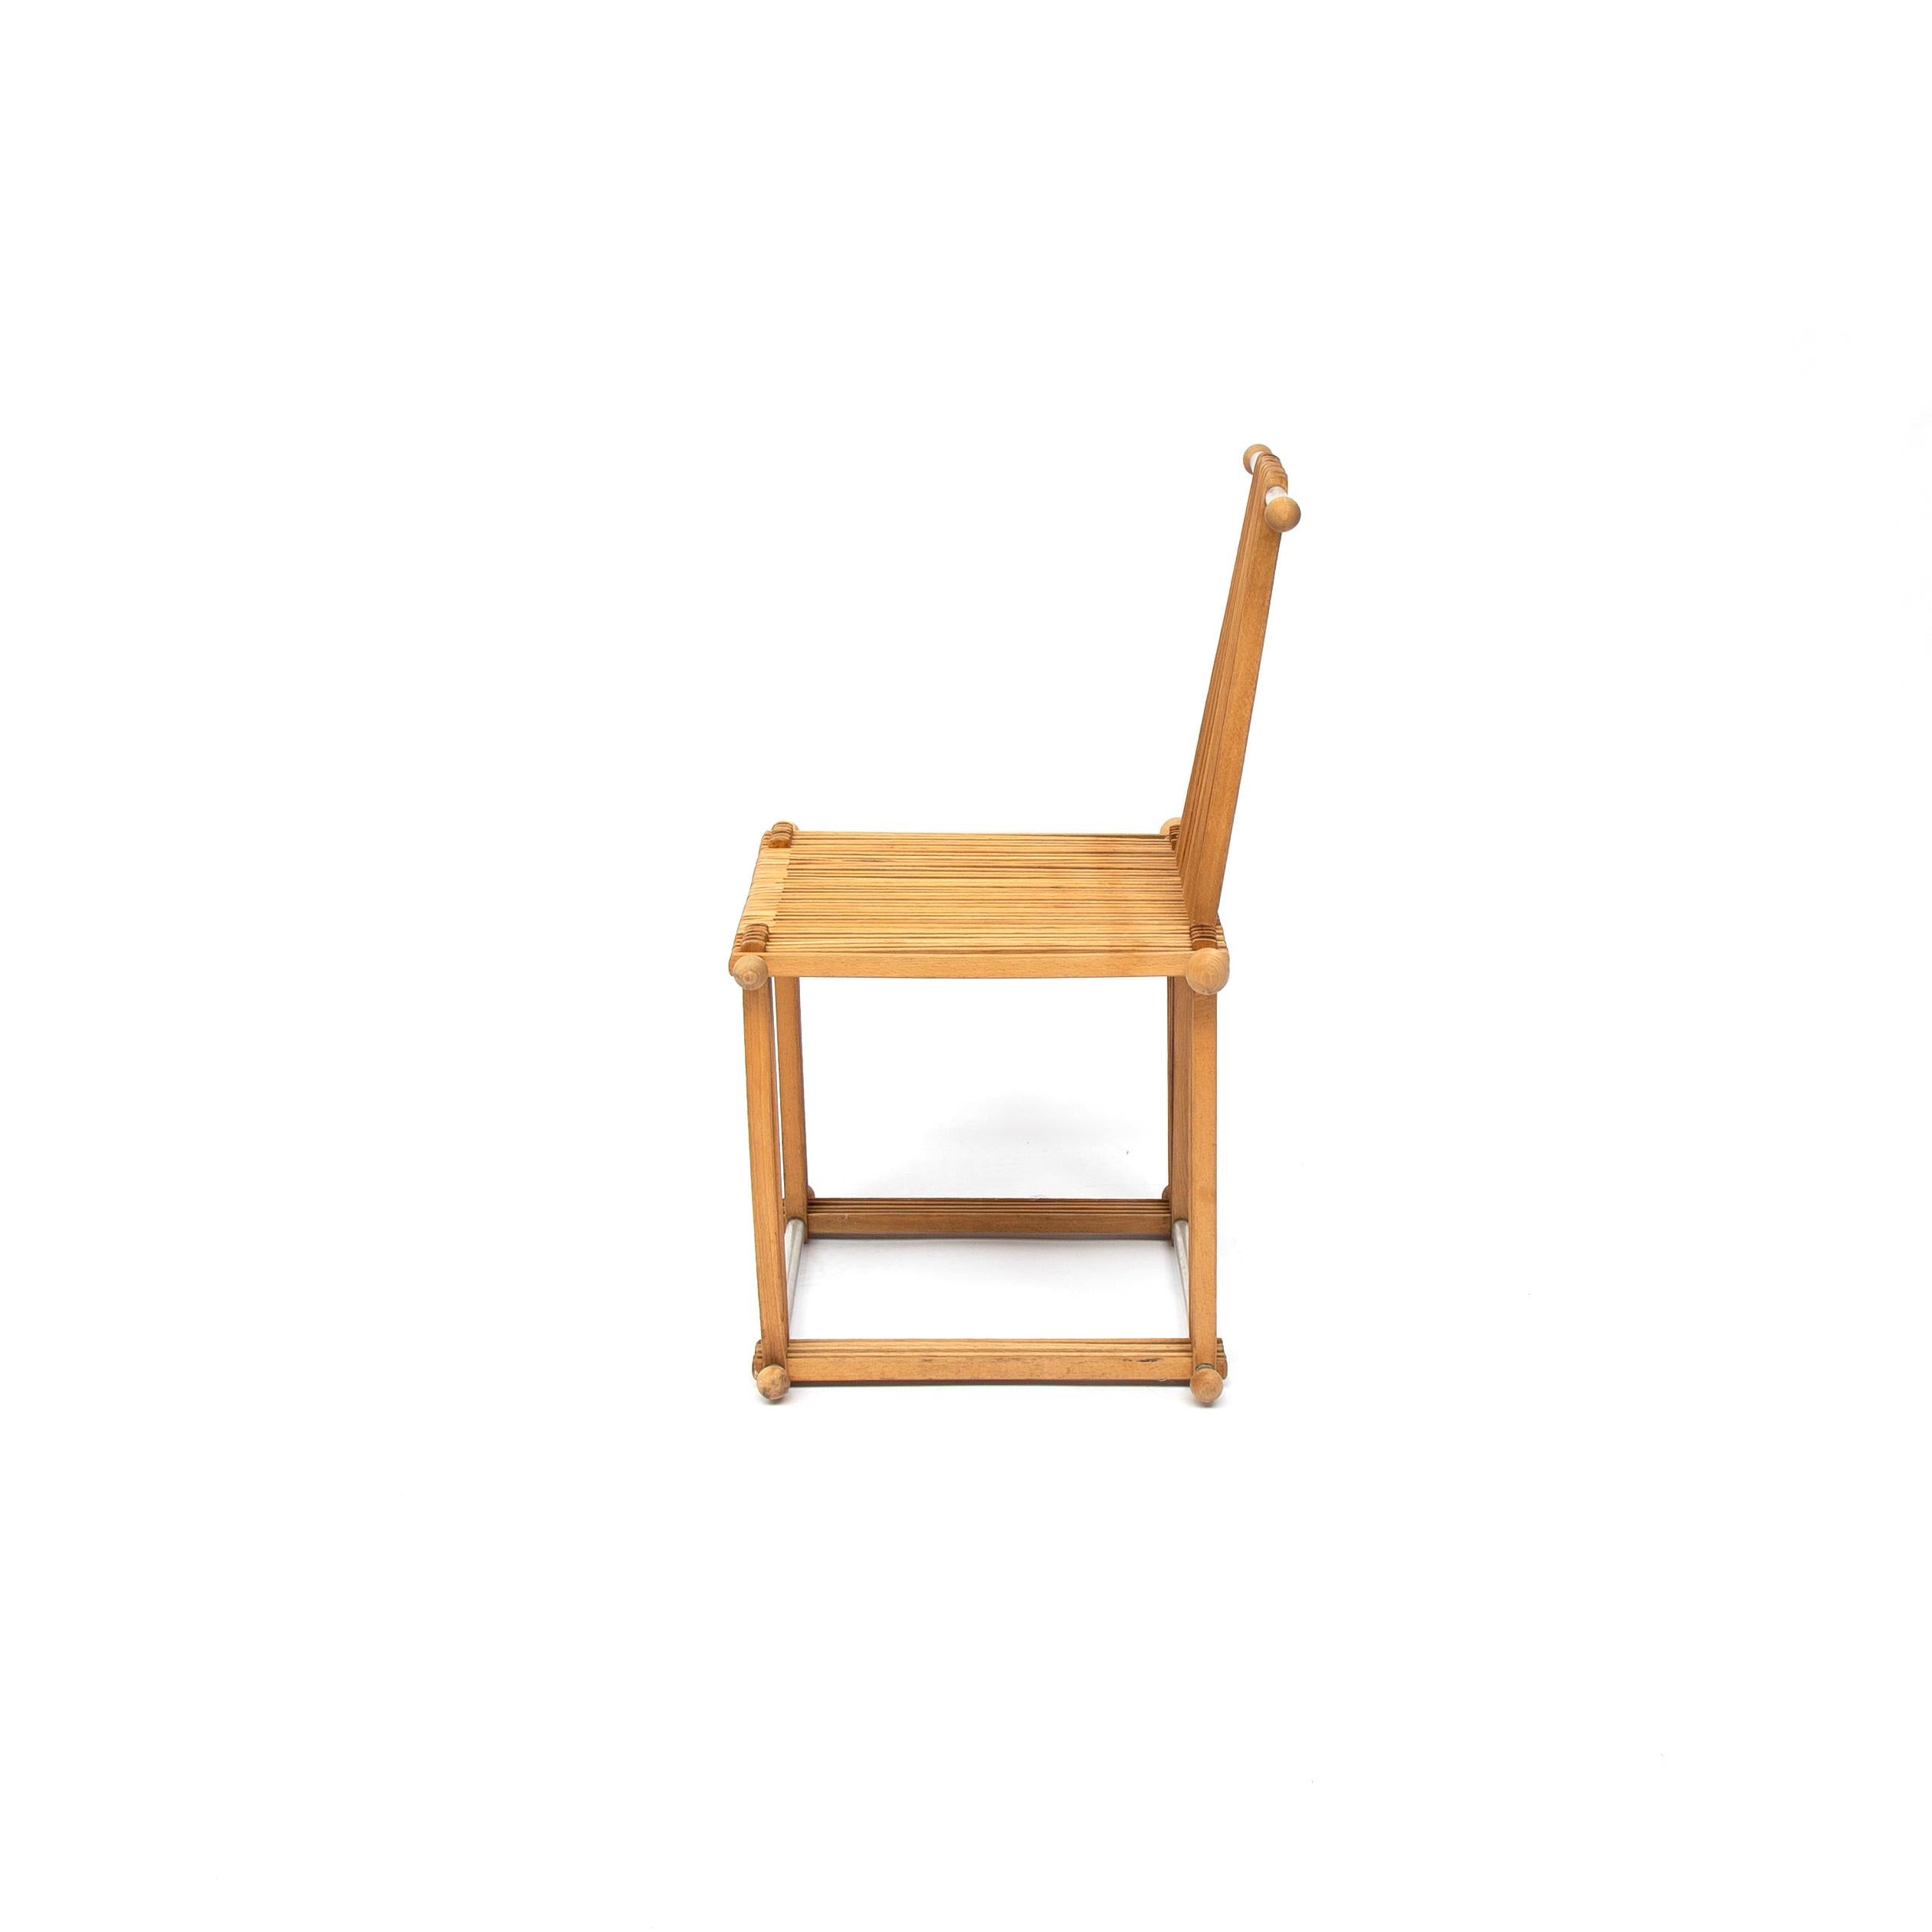 Rare wooden vintage slatted popstical stick design chair, prototype, 1980s.